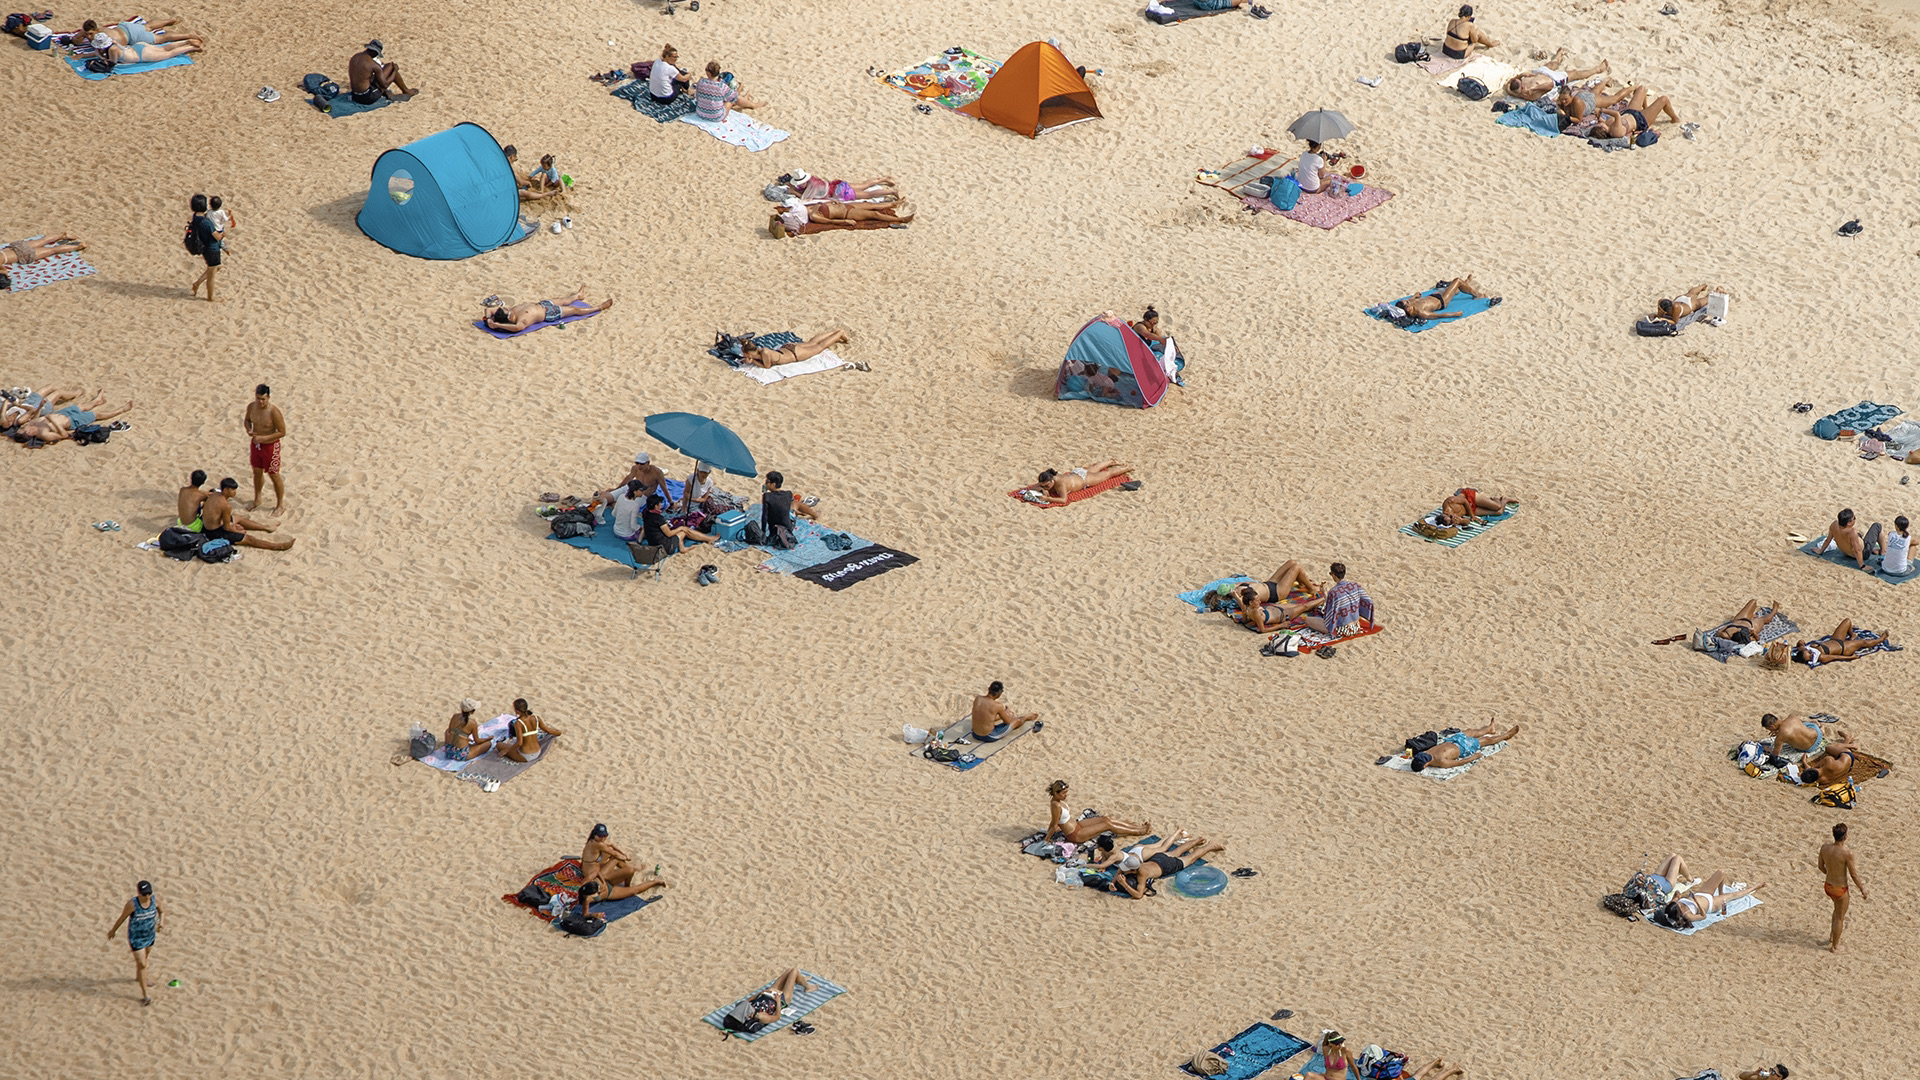 Life’s a beach: 17 photos that capture the spirit of summer